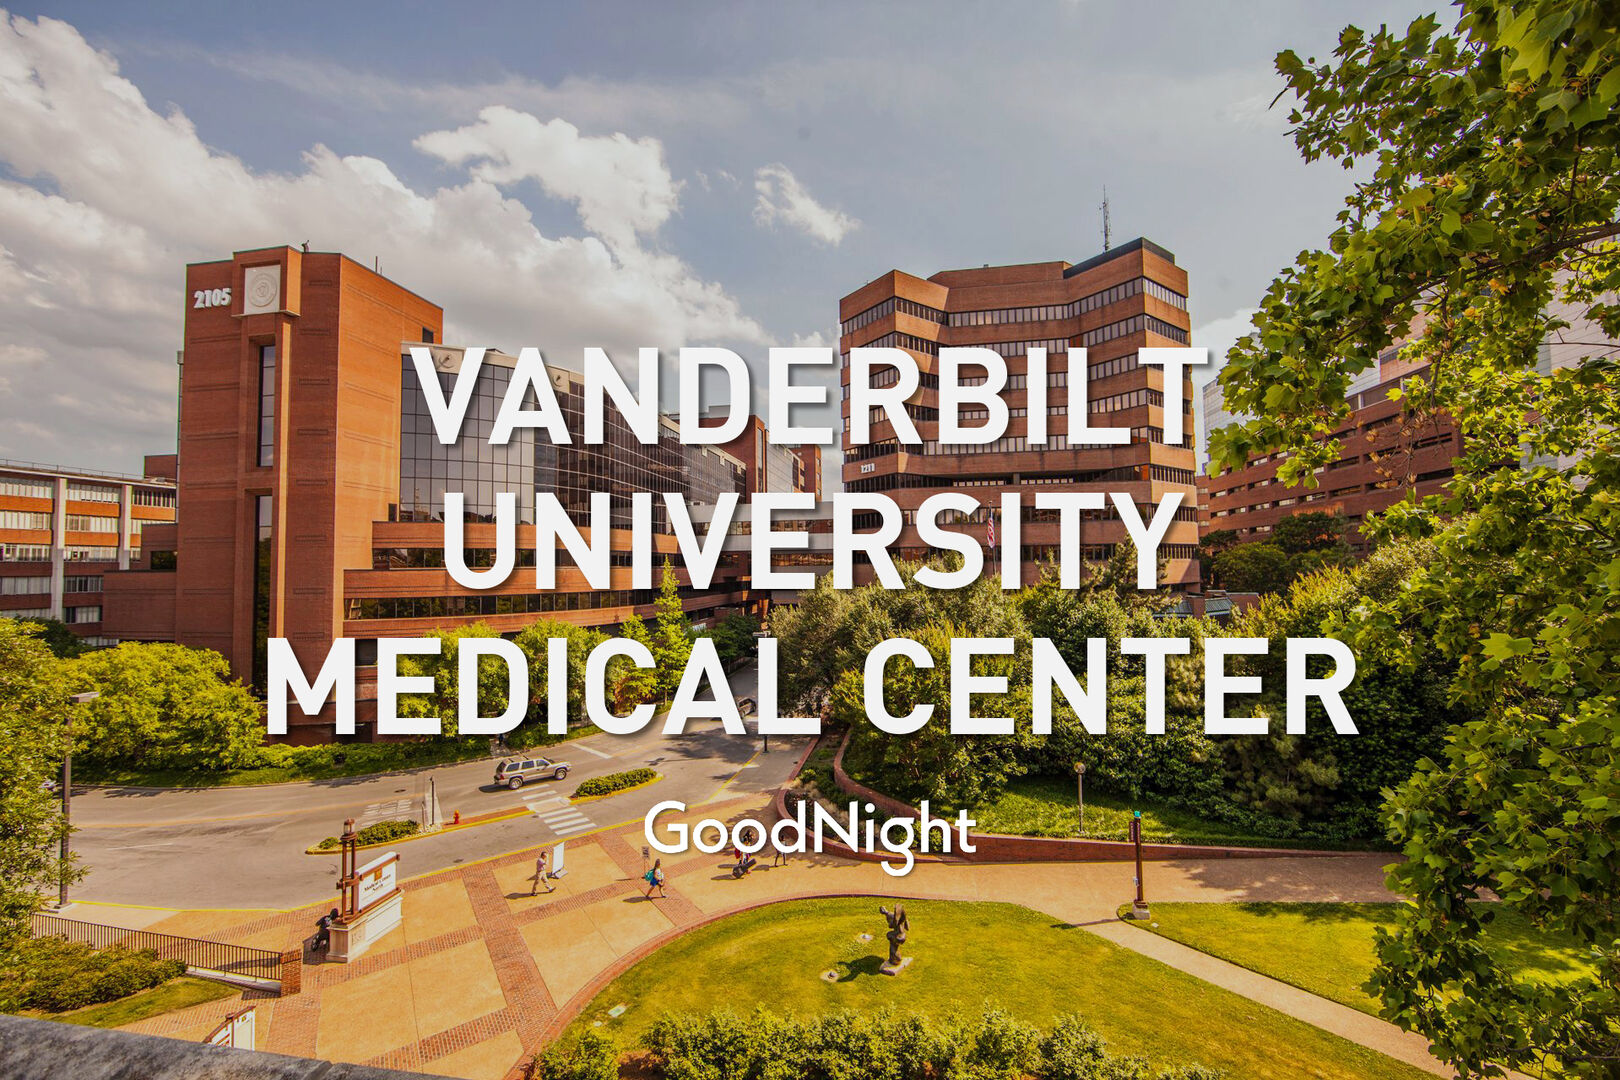 8 mins: Vanderbilt Univ. Medical Center